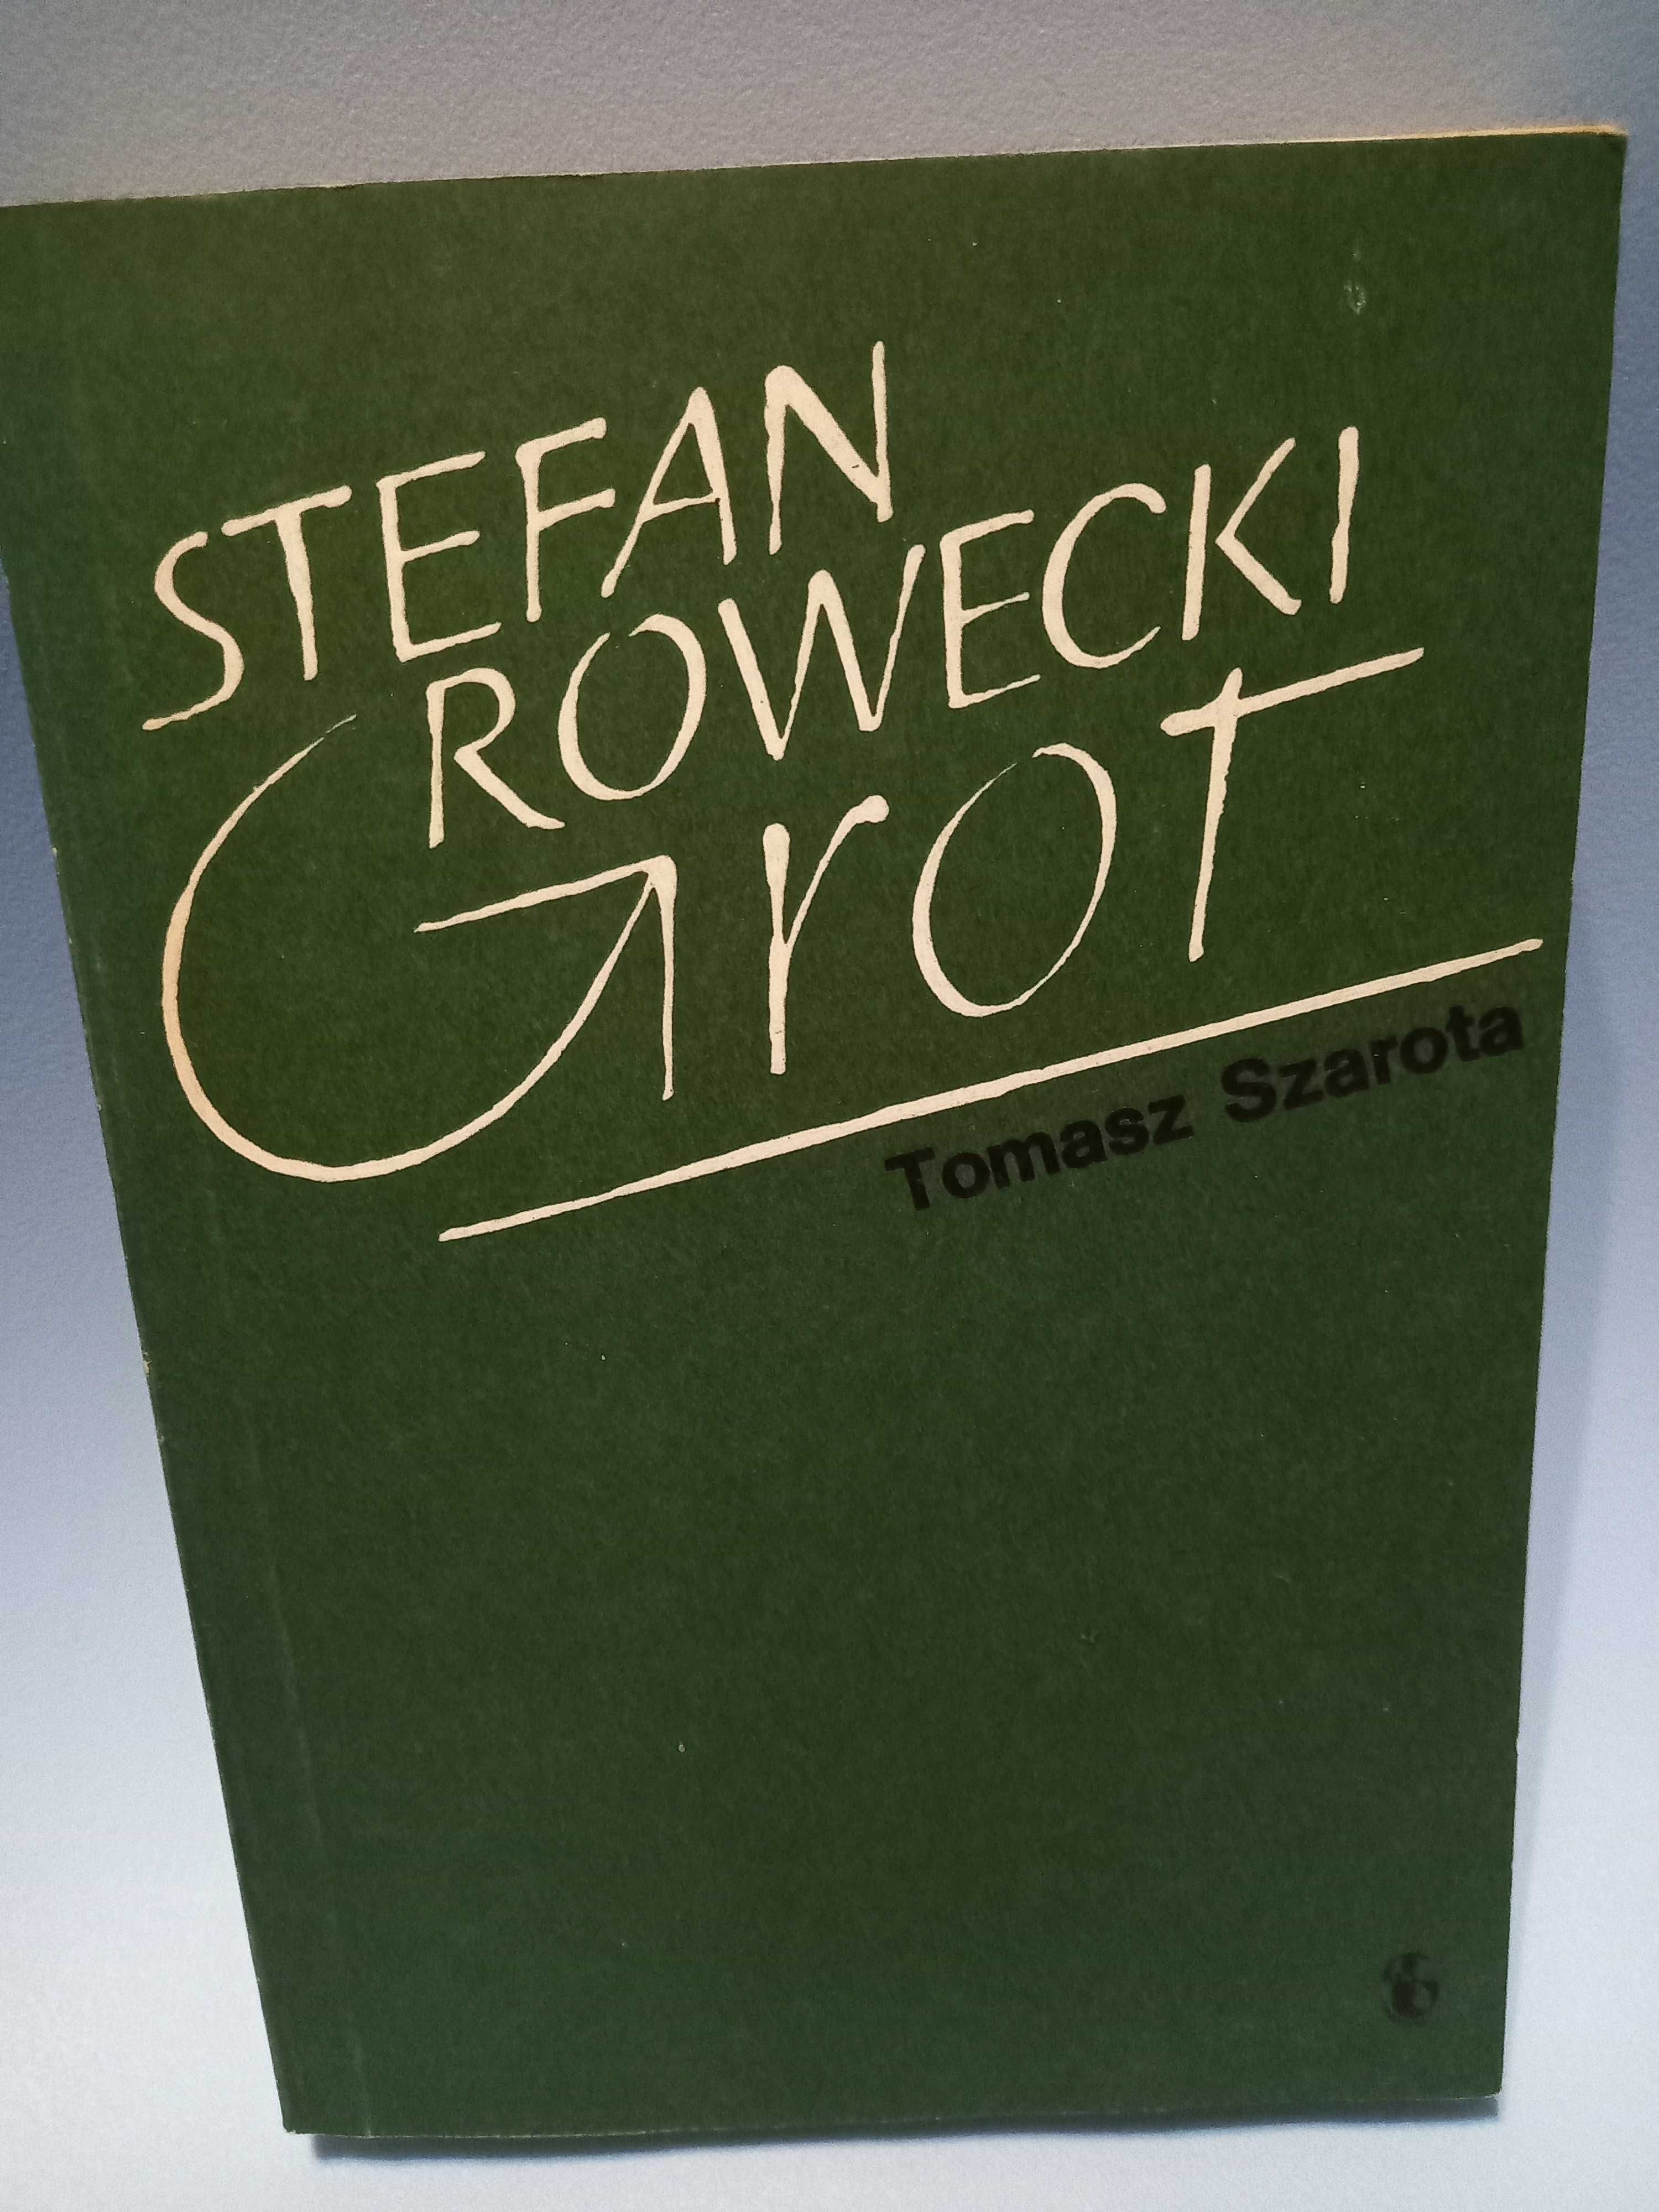 Stefan Rowecki "Grot" - Tomasz Szarota